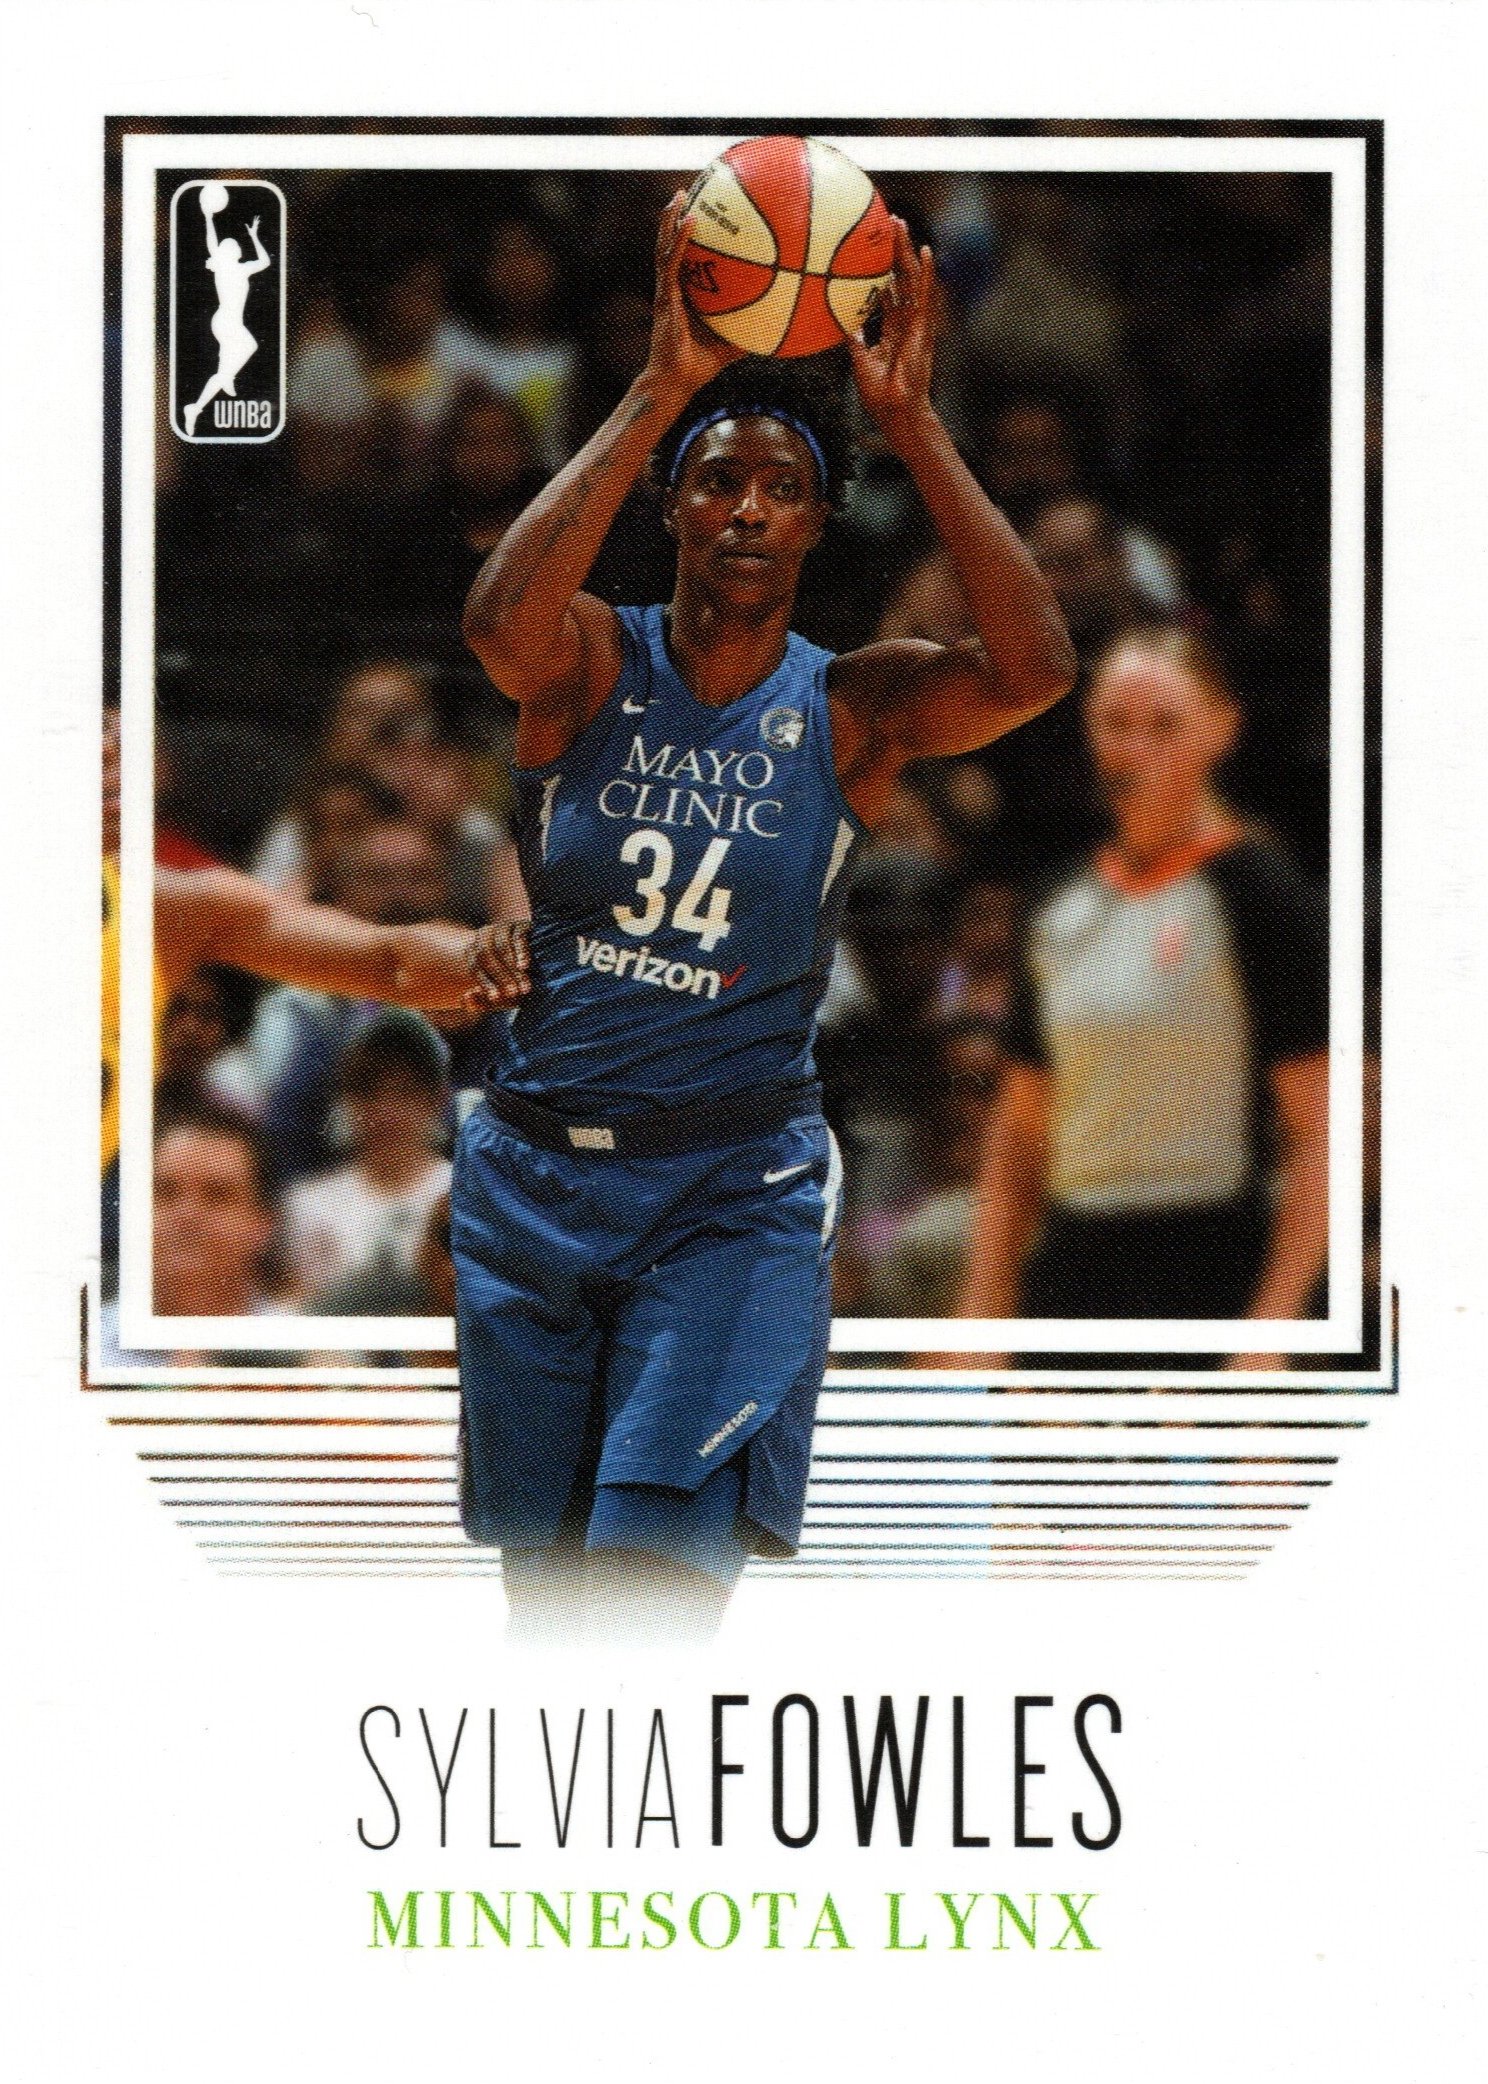 Sylvia Fowles - Wikipedia